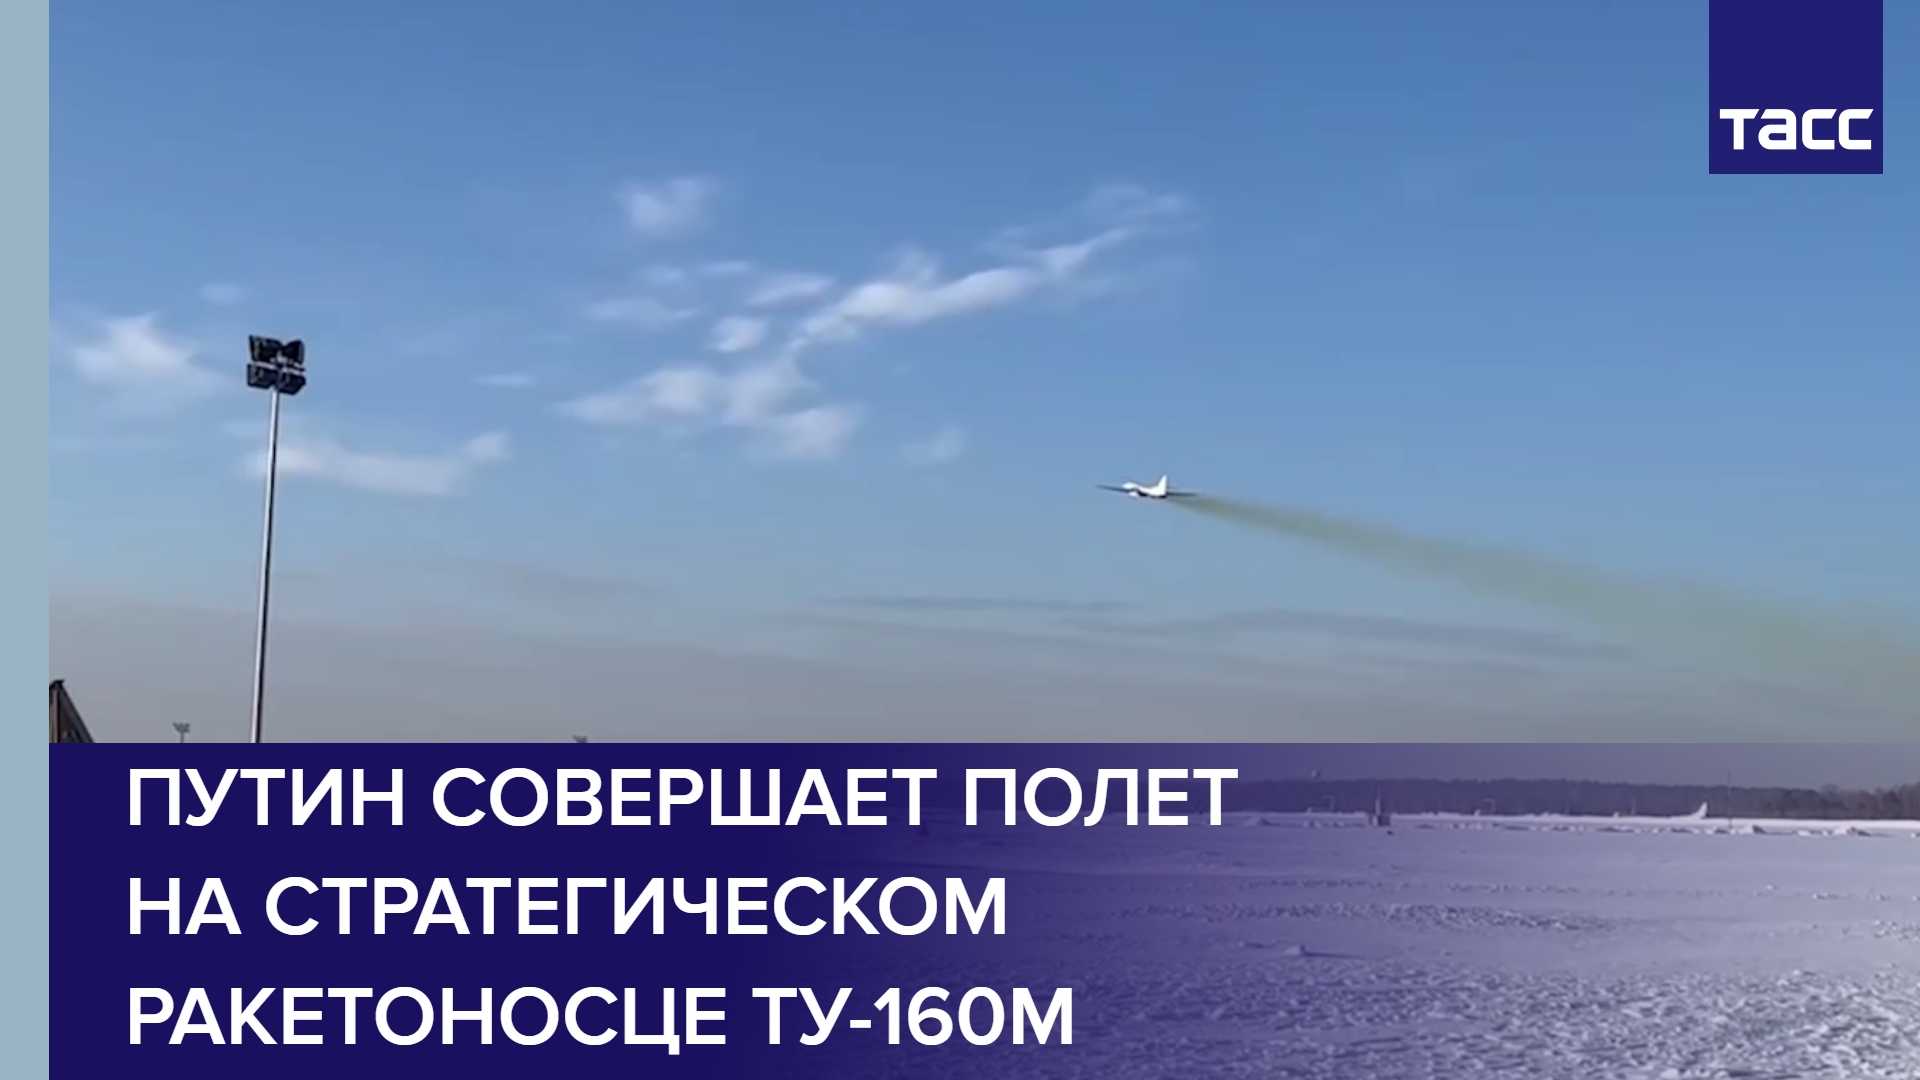 Путин совершает полет на стратегическом ракетоносце Ту-160М